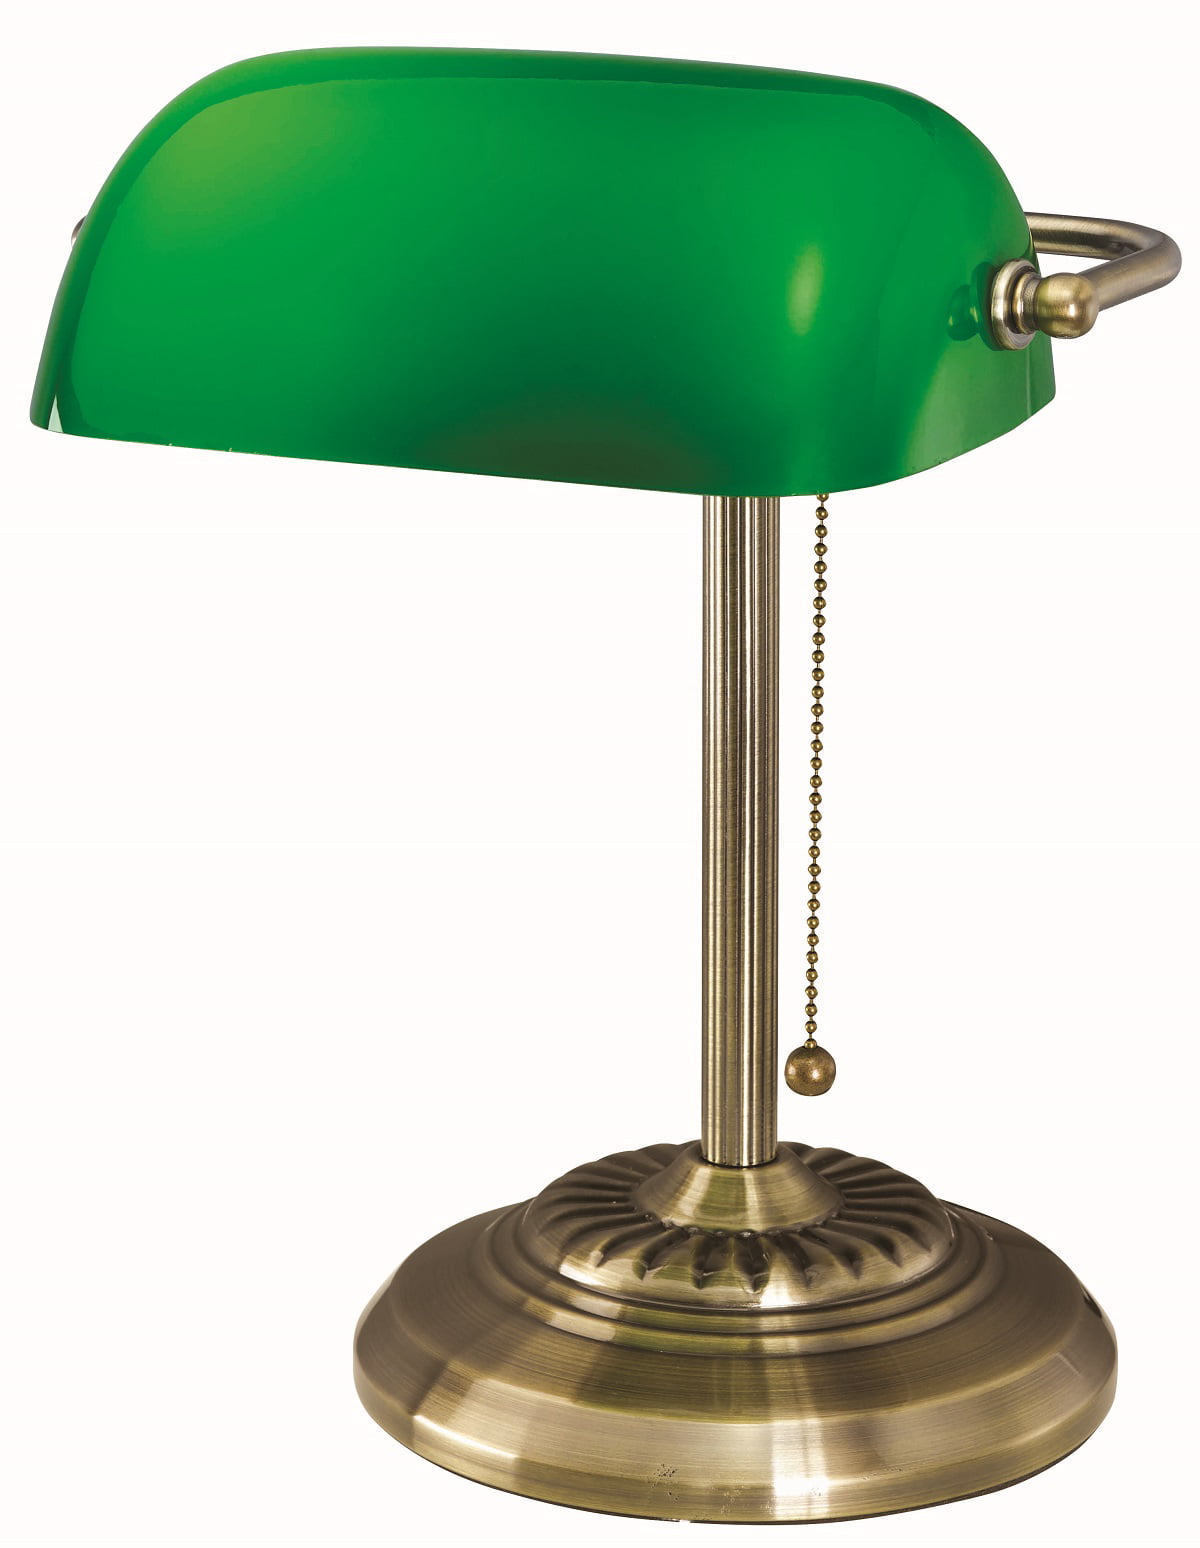 V-LIGHT Classic Style CFL Banker's Desk 